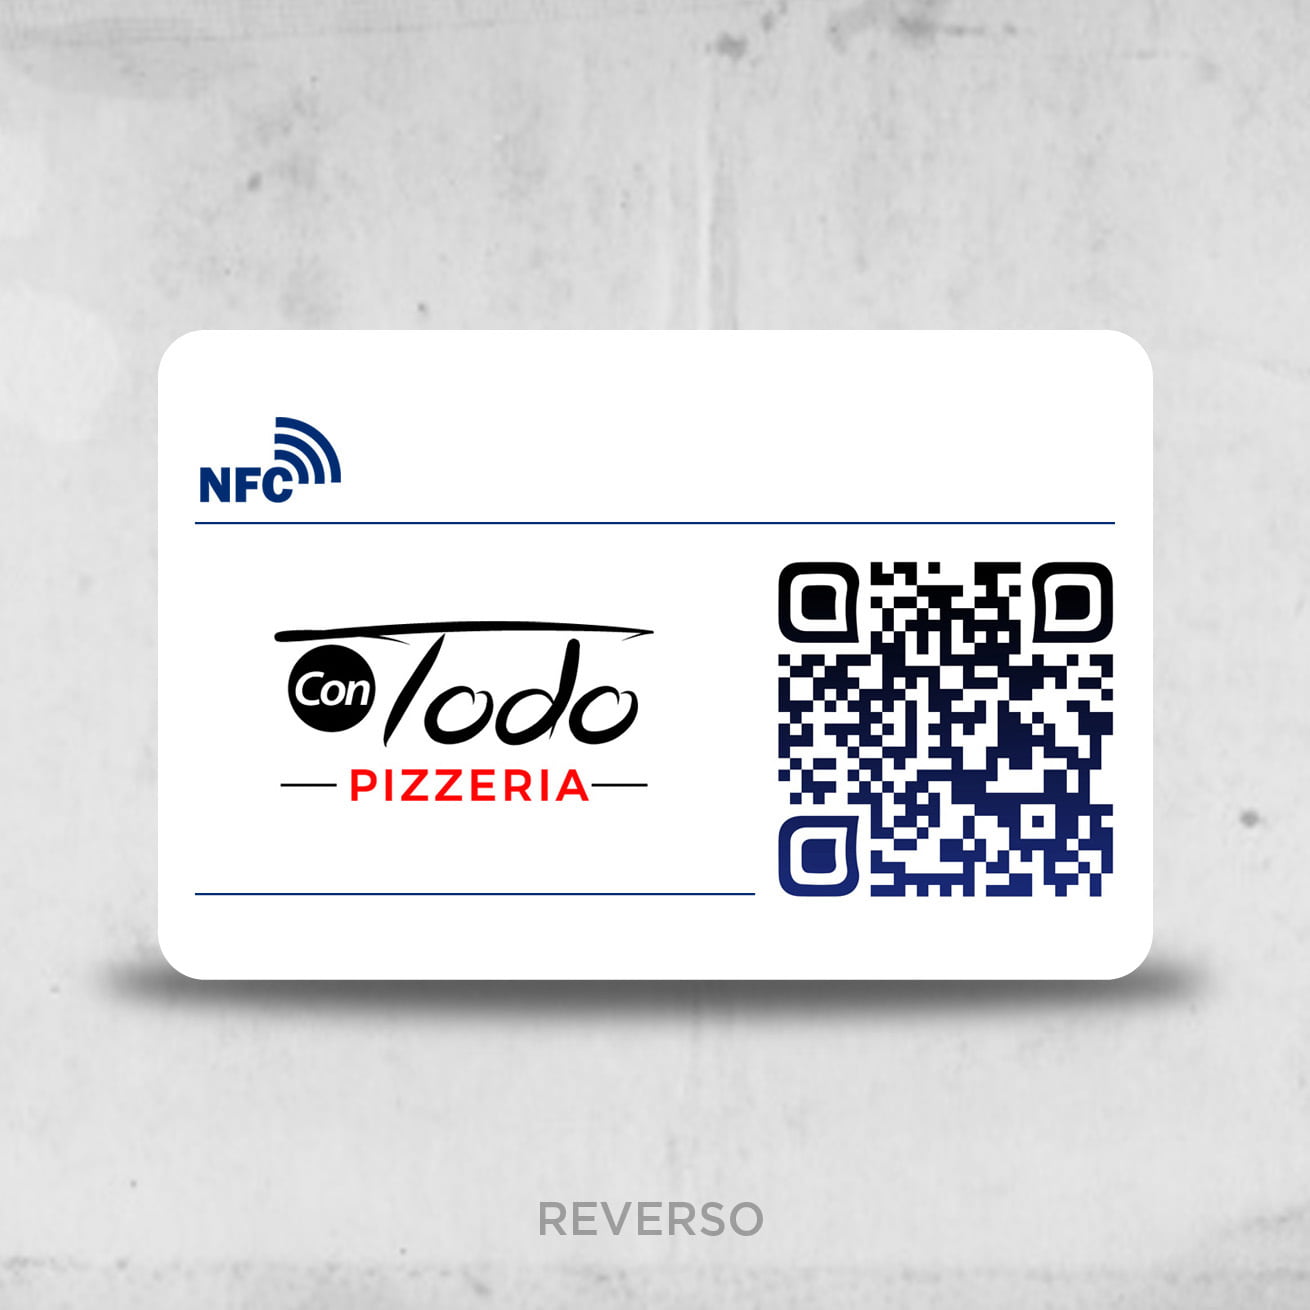 Tarjeta de presentación digital + tarjeta física NFC - My share card